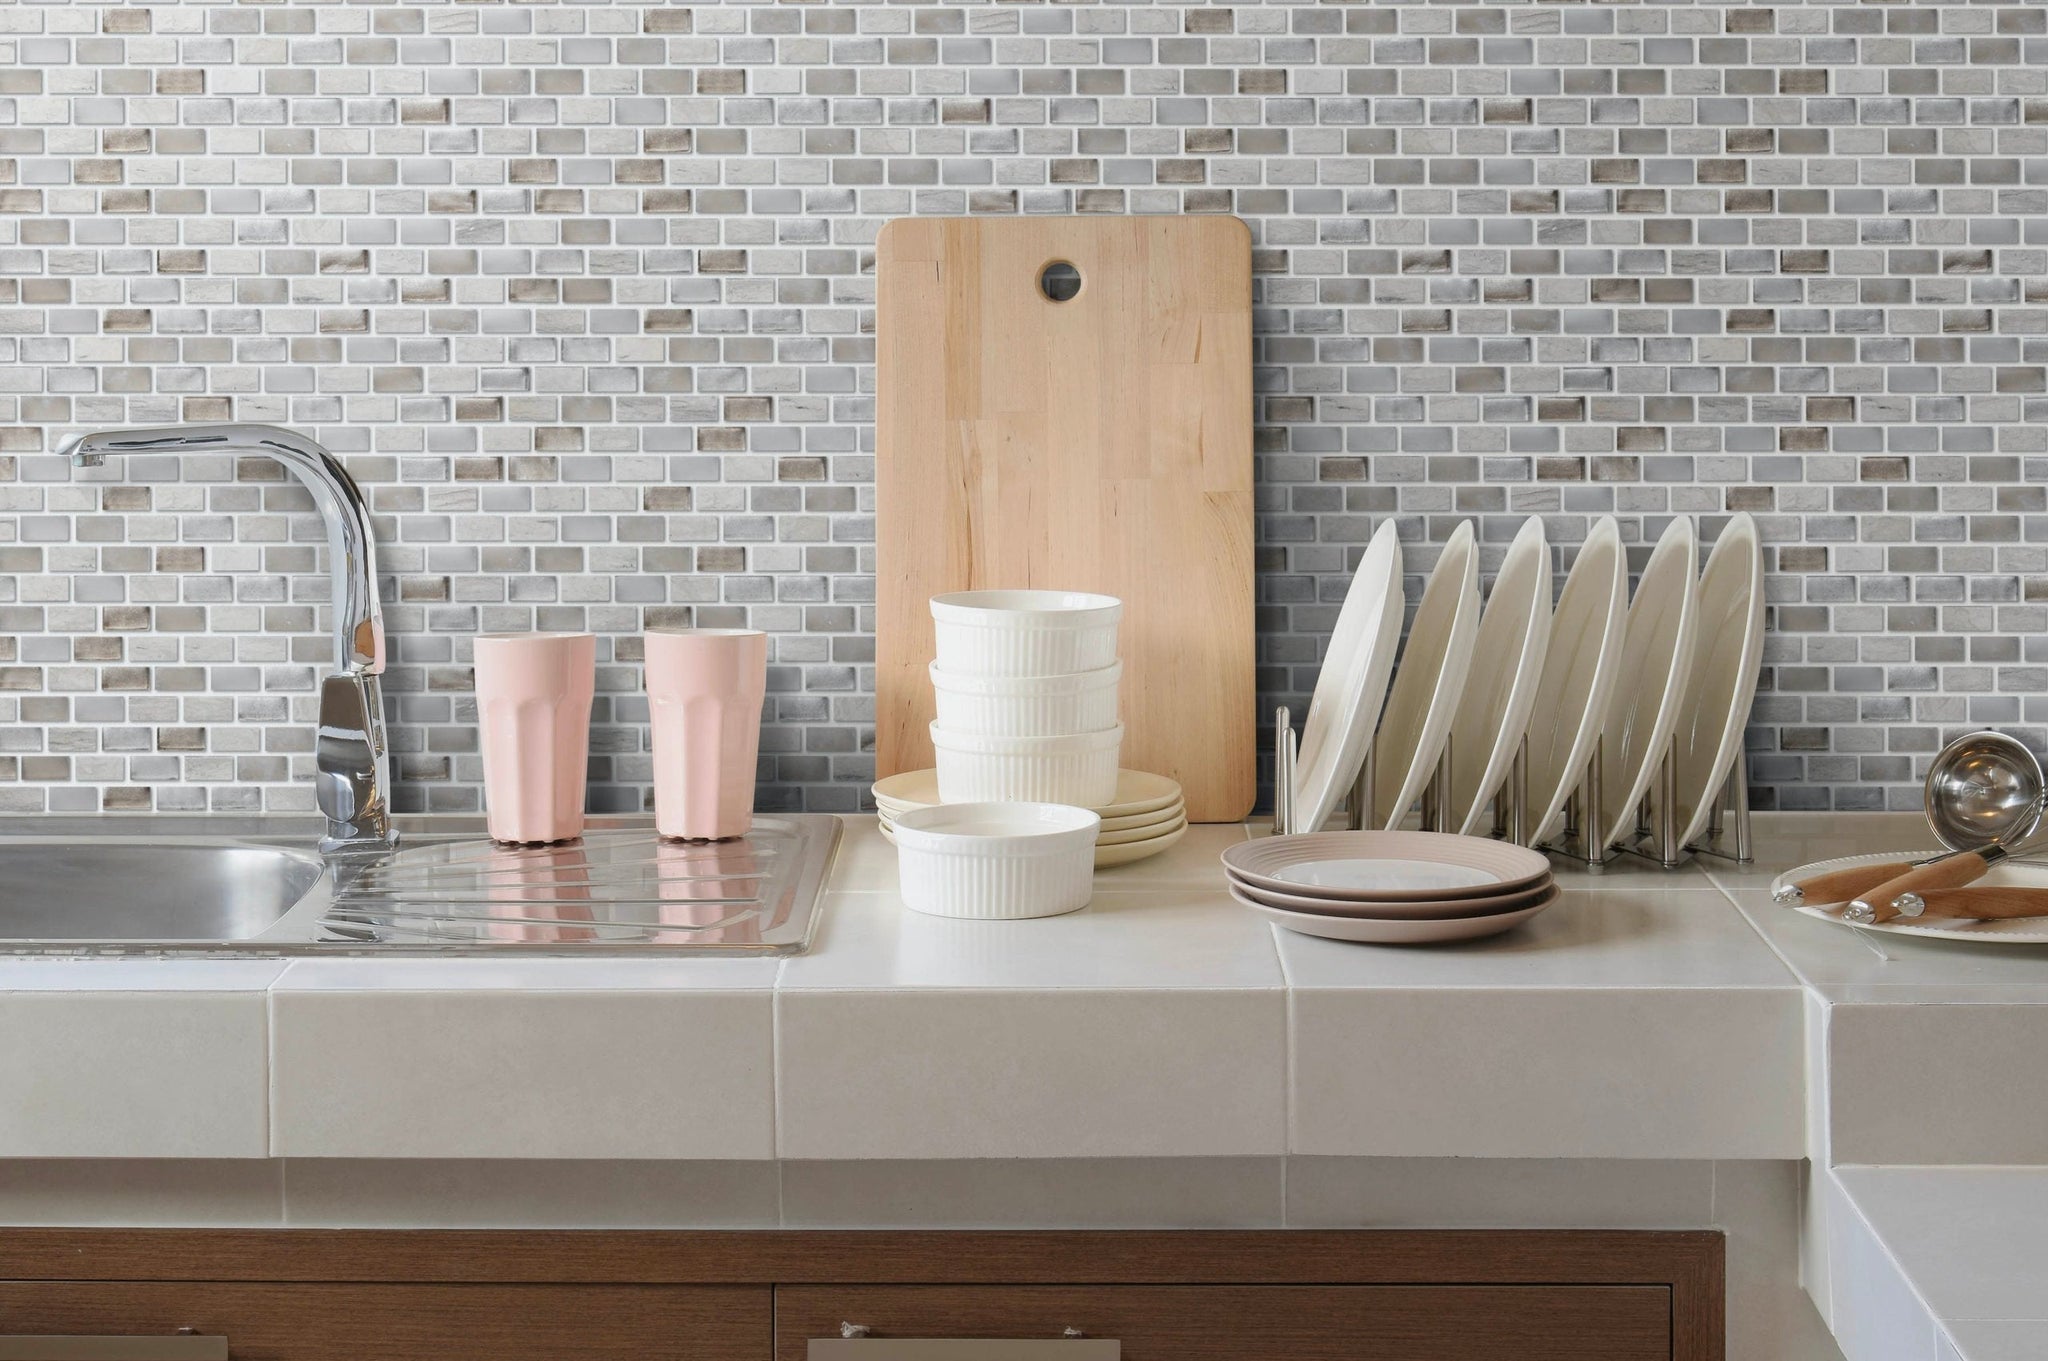 The Best Ways on How to Clean Kitchen Backsplash Tile